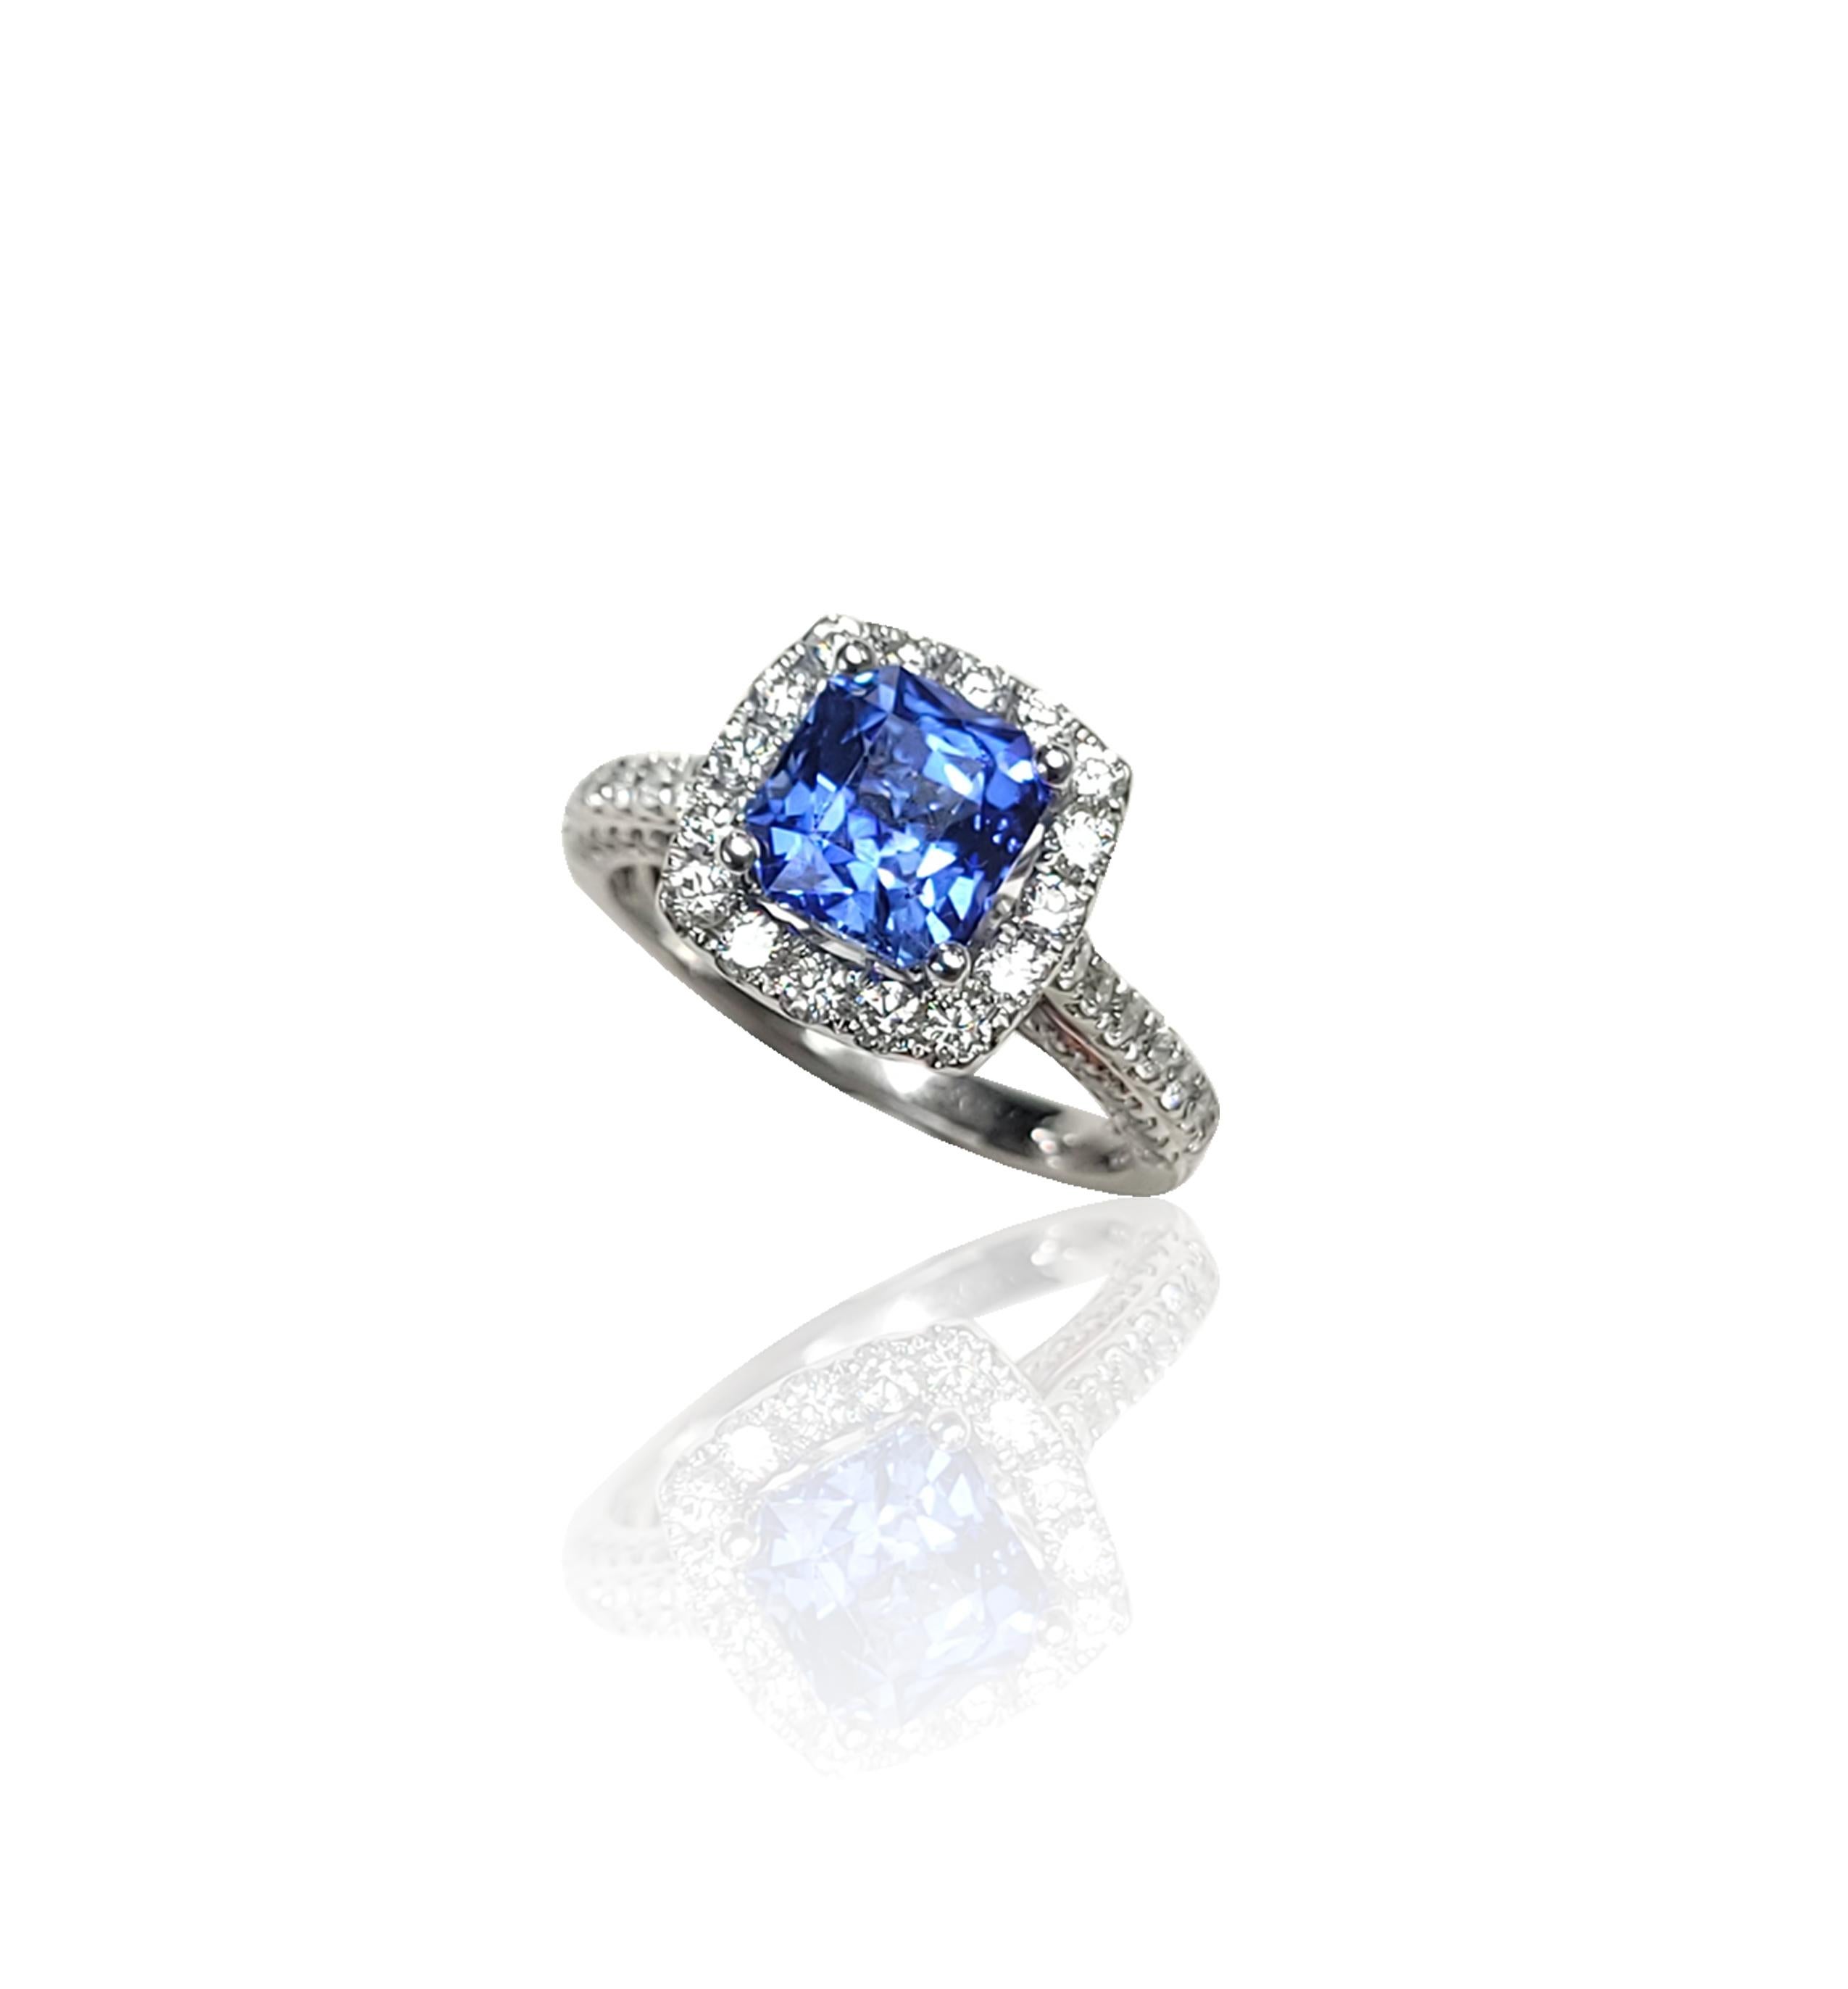 Sapphire - 2.46ct
Diamonds - 0.88ct
Ring Metal - 14k white gold